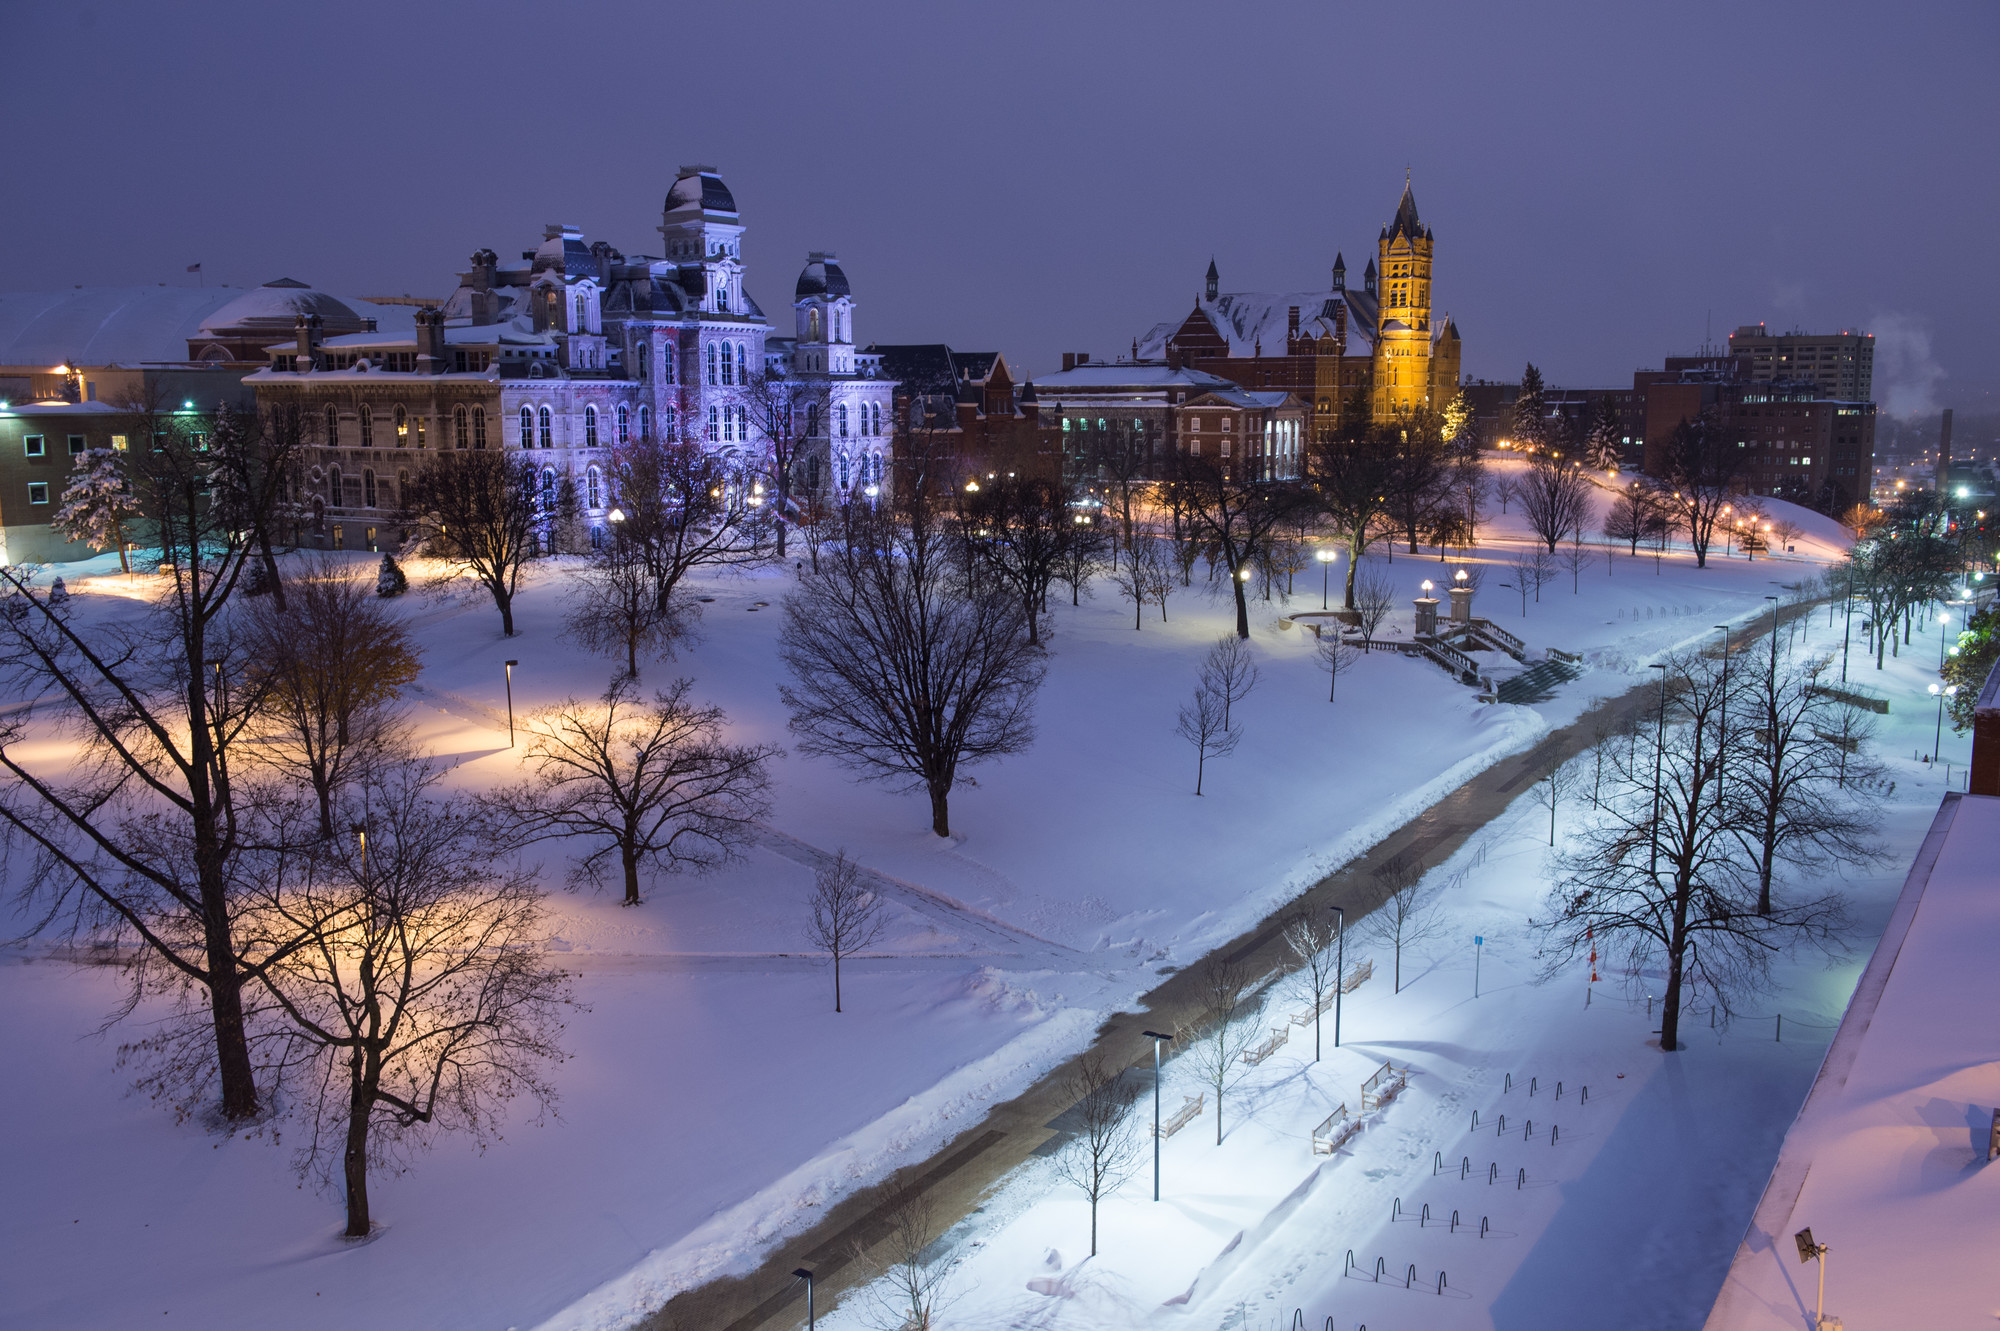 snowy nighttime campus scene